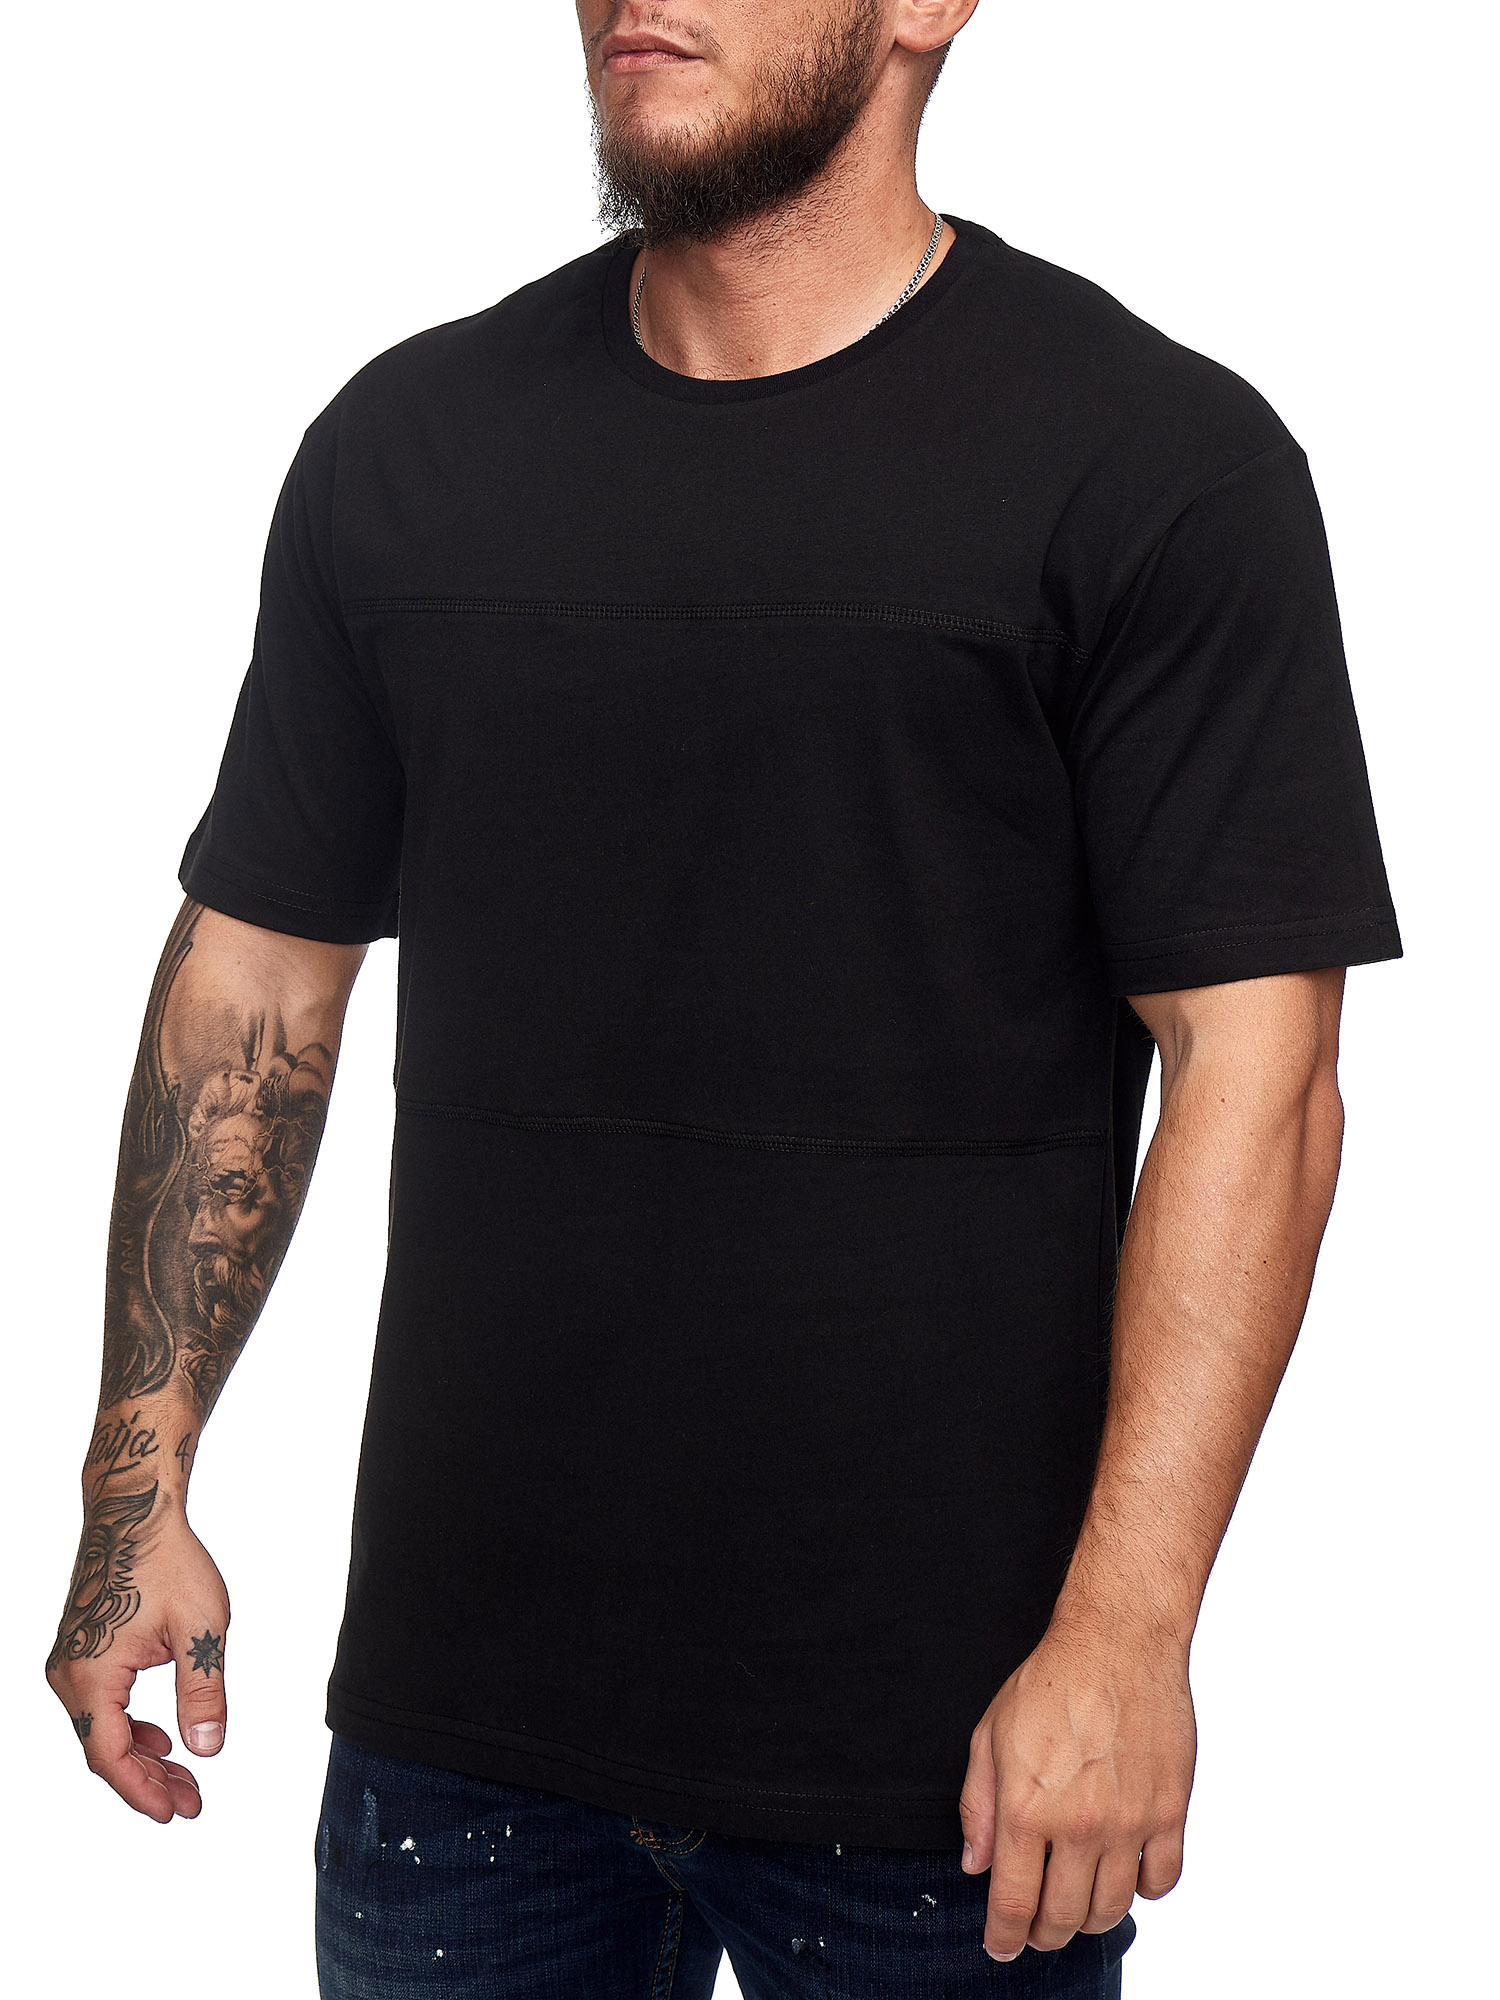 Herren T-Shirt Poloshirt Shirt Kurzarm Printshirt Polo Kurzarm 9032C 